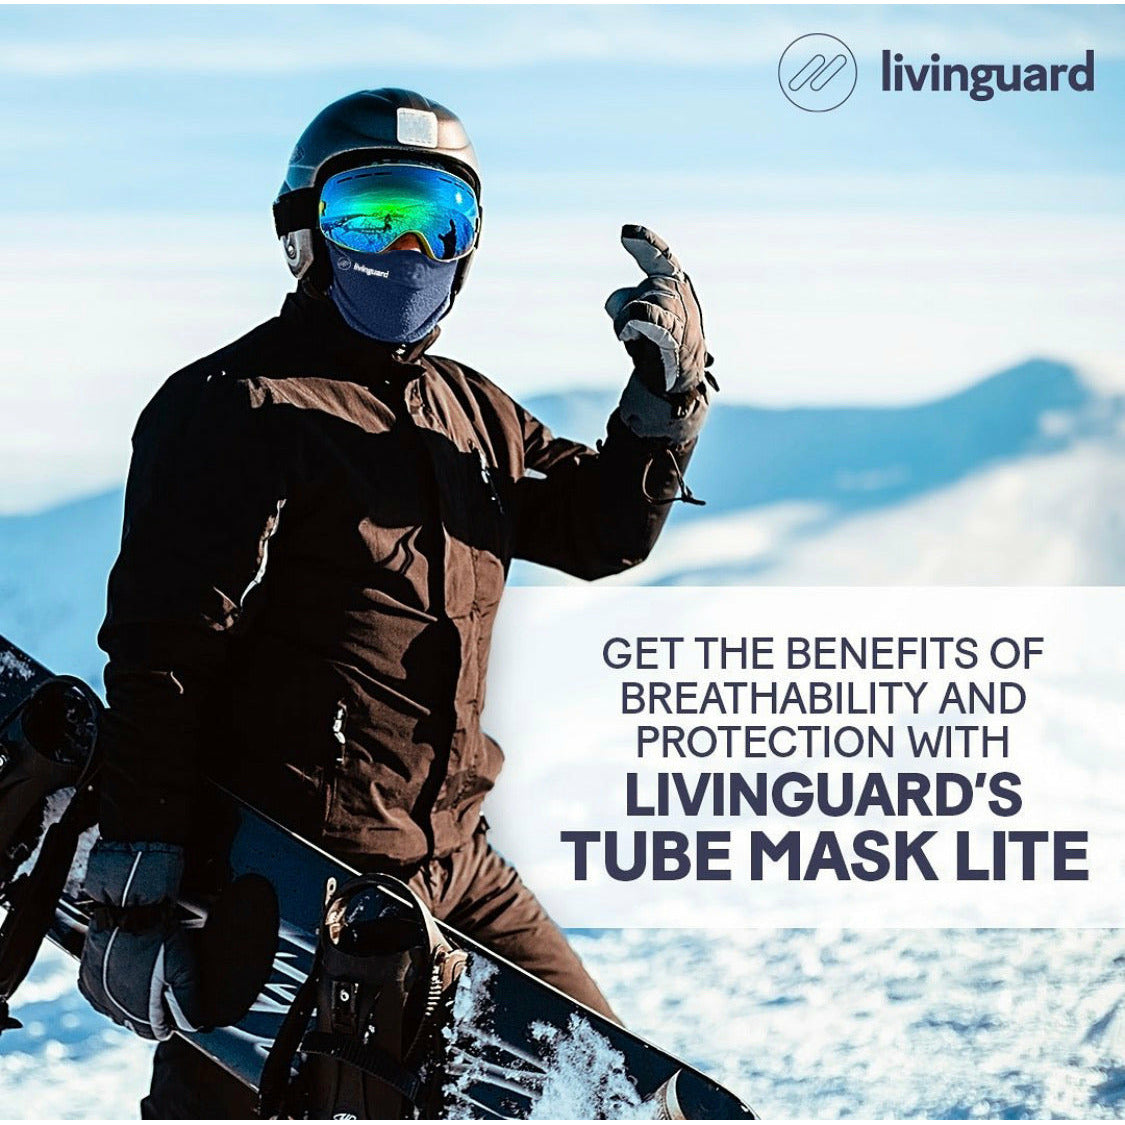 Livinguard Tube Mask Lite